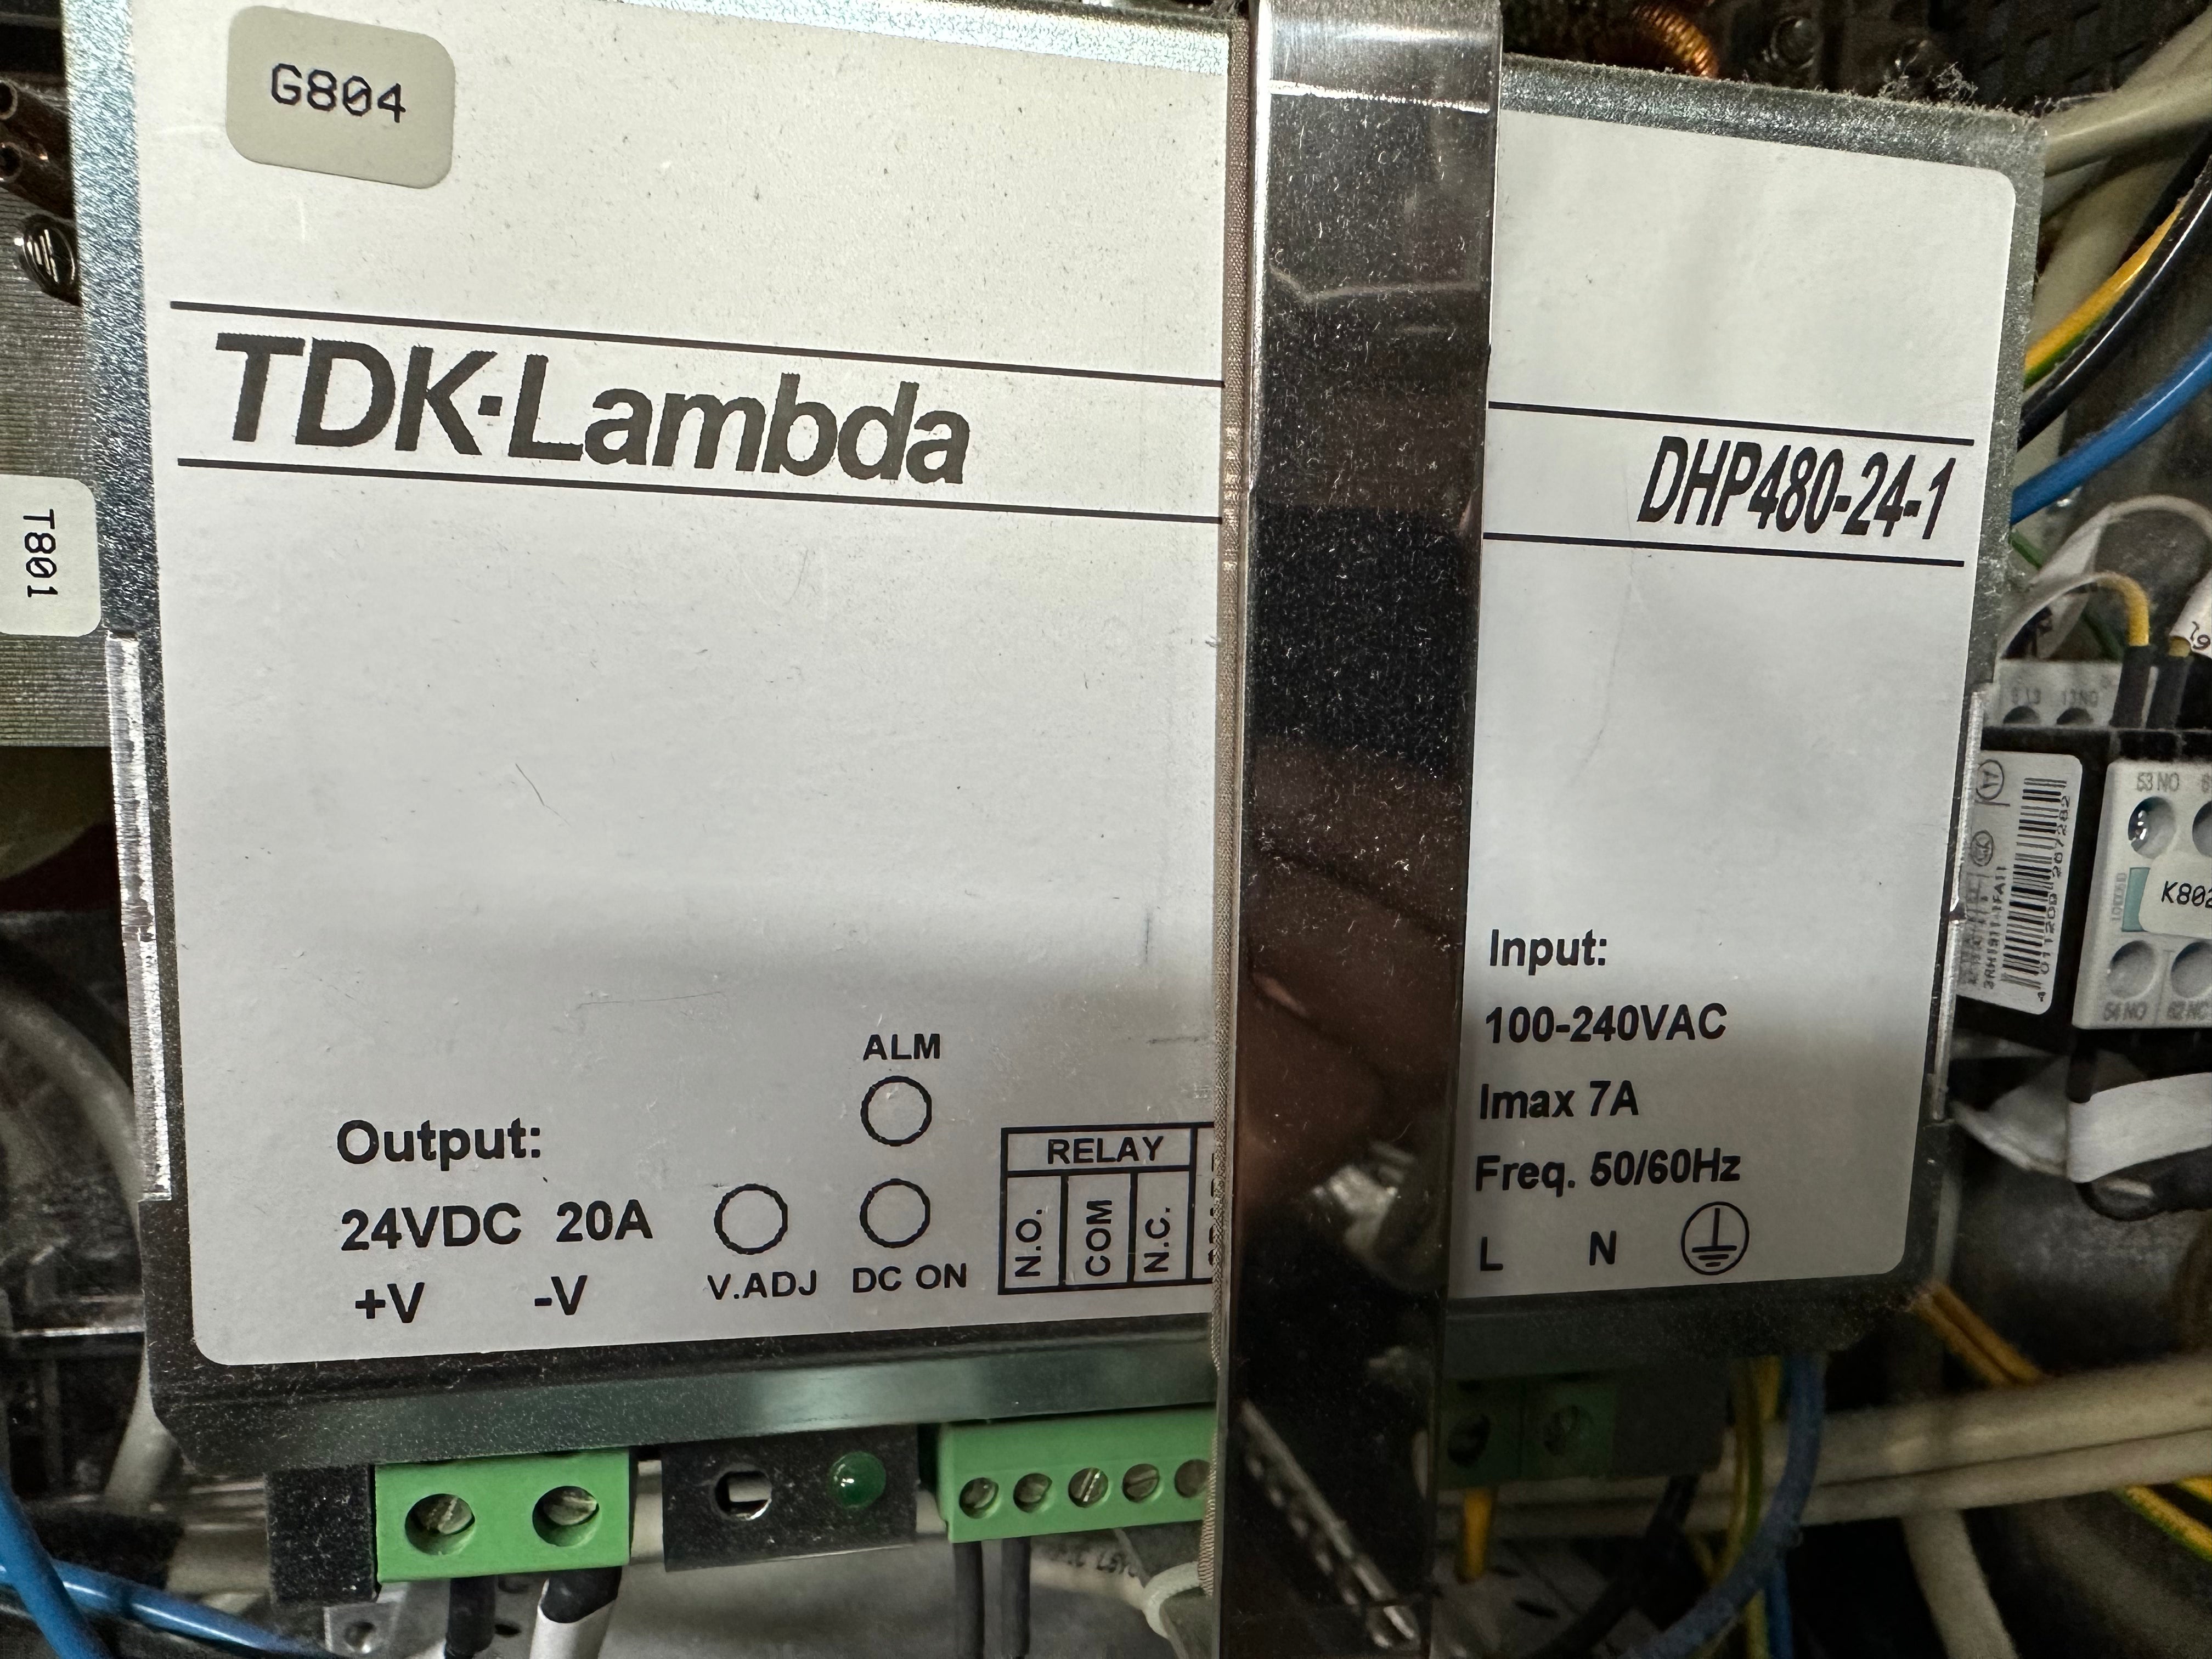 tdk lambda dhp480-24-1